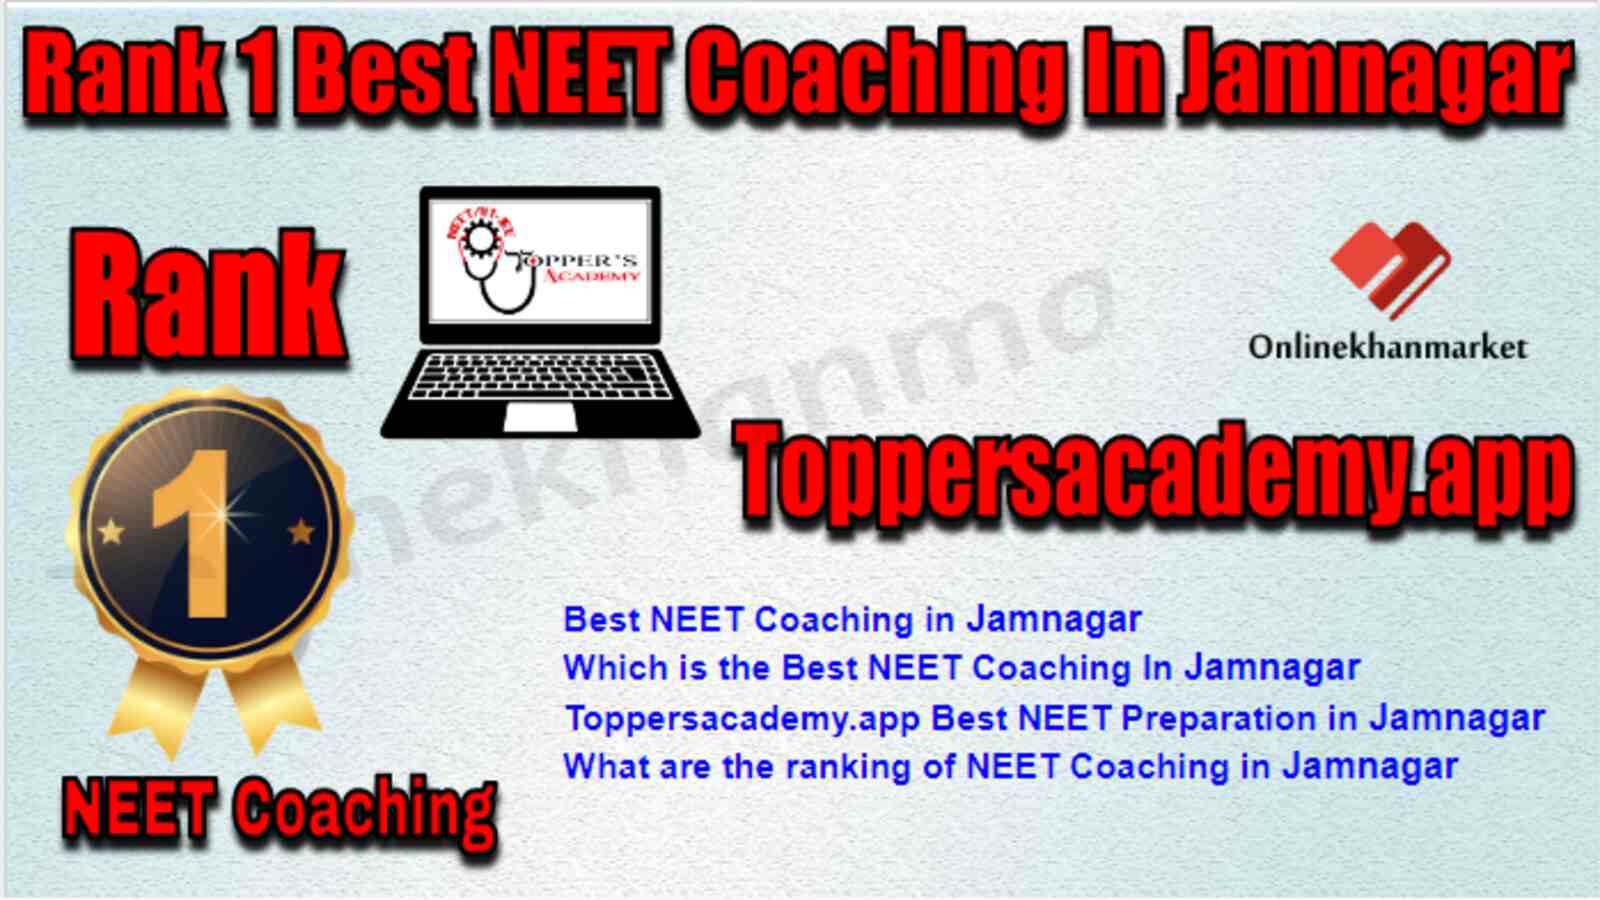 Rank 1 Best NEET Coaching in Jamnagar